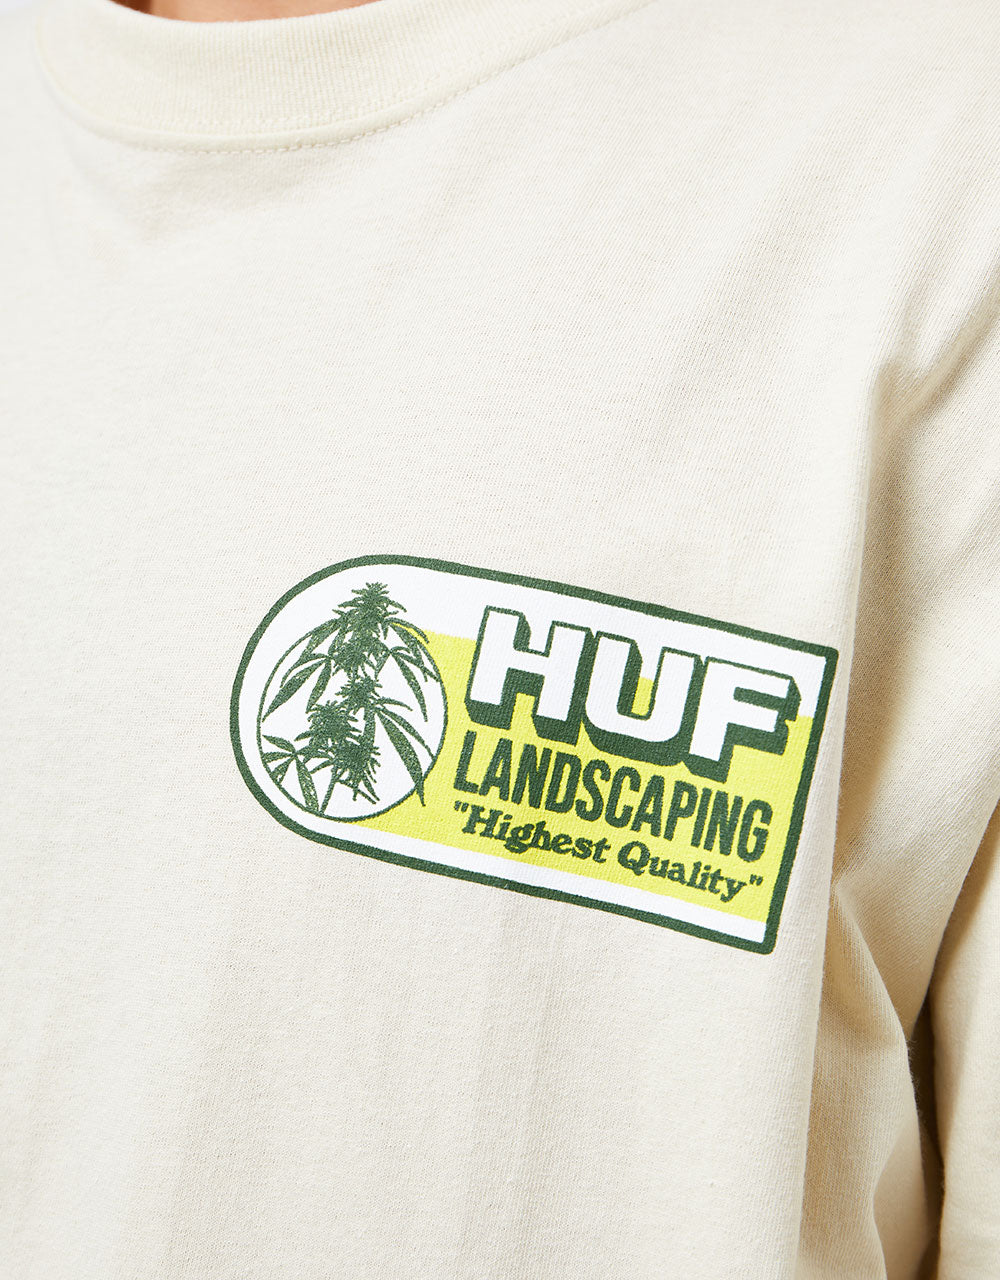 HUF Landscaping T-Shirt - Bone